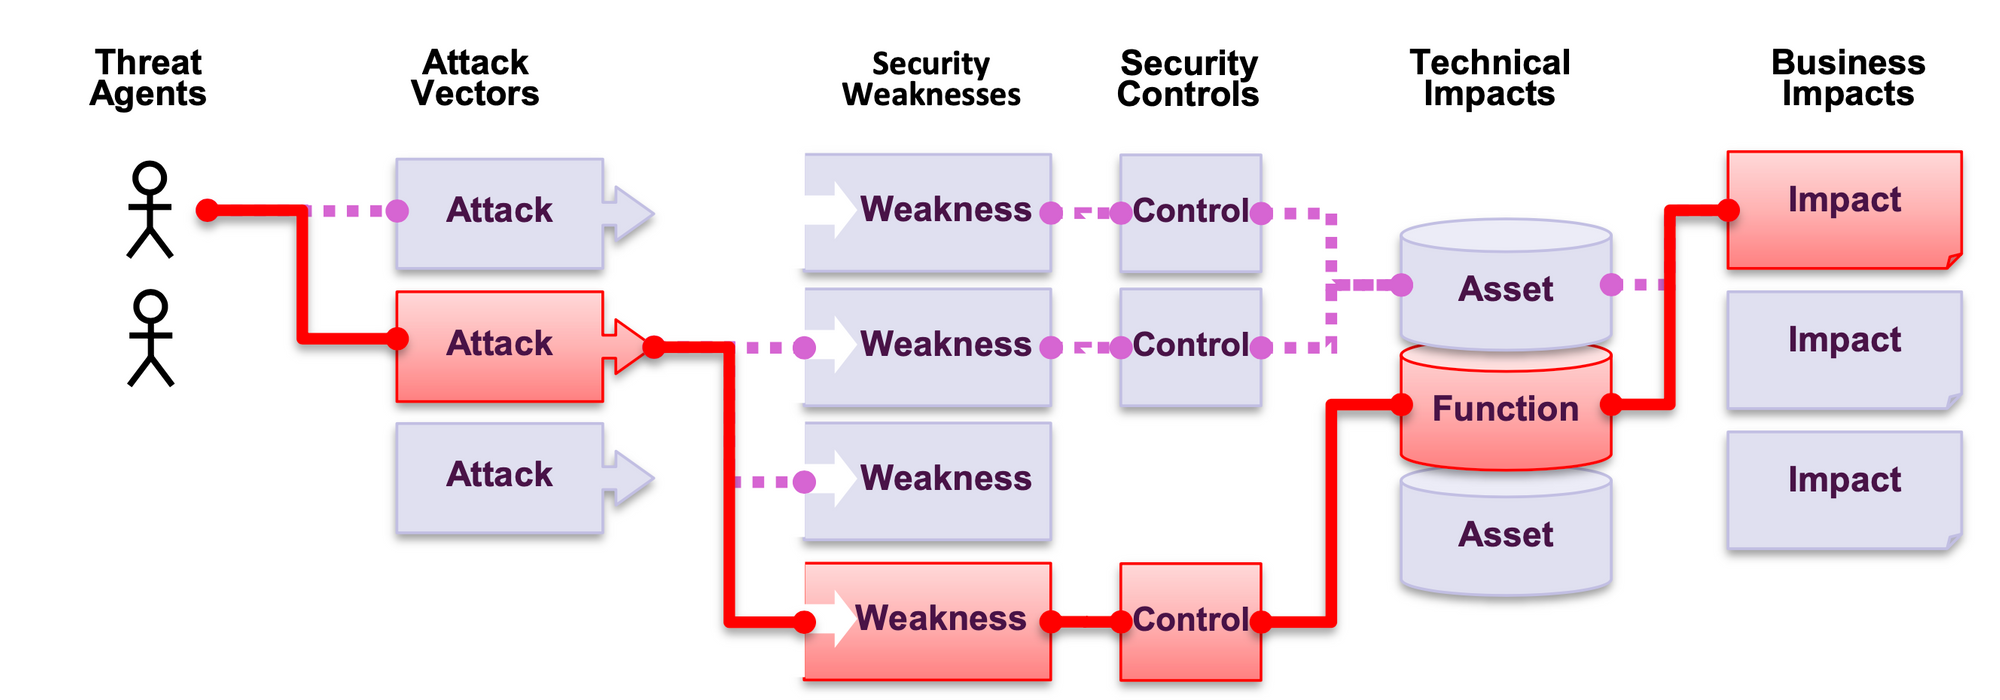 Software engineer's security essentials - Don't imitate, understand